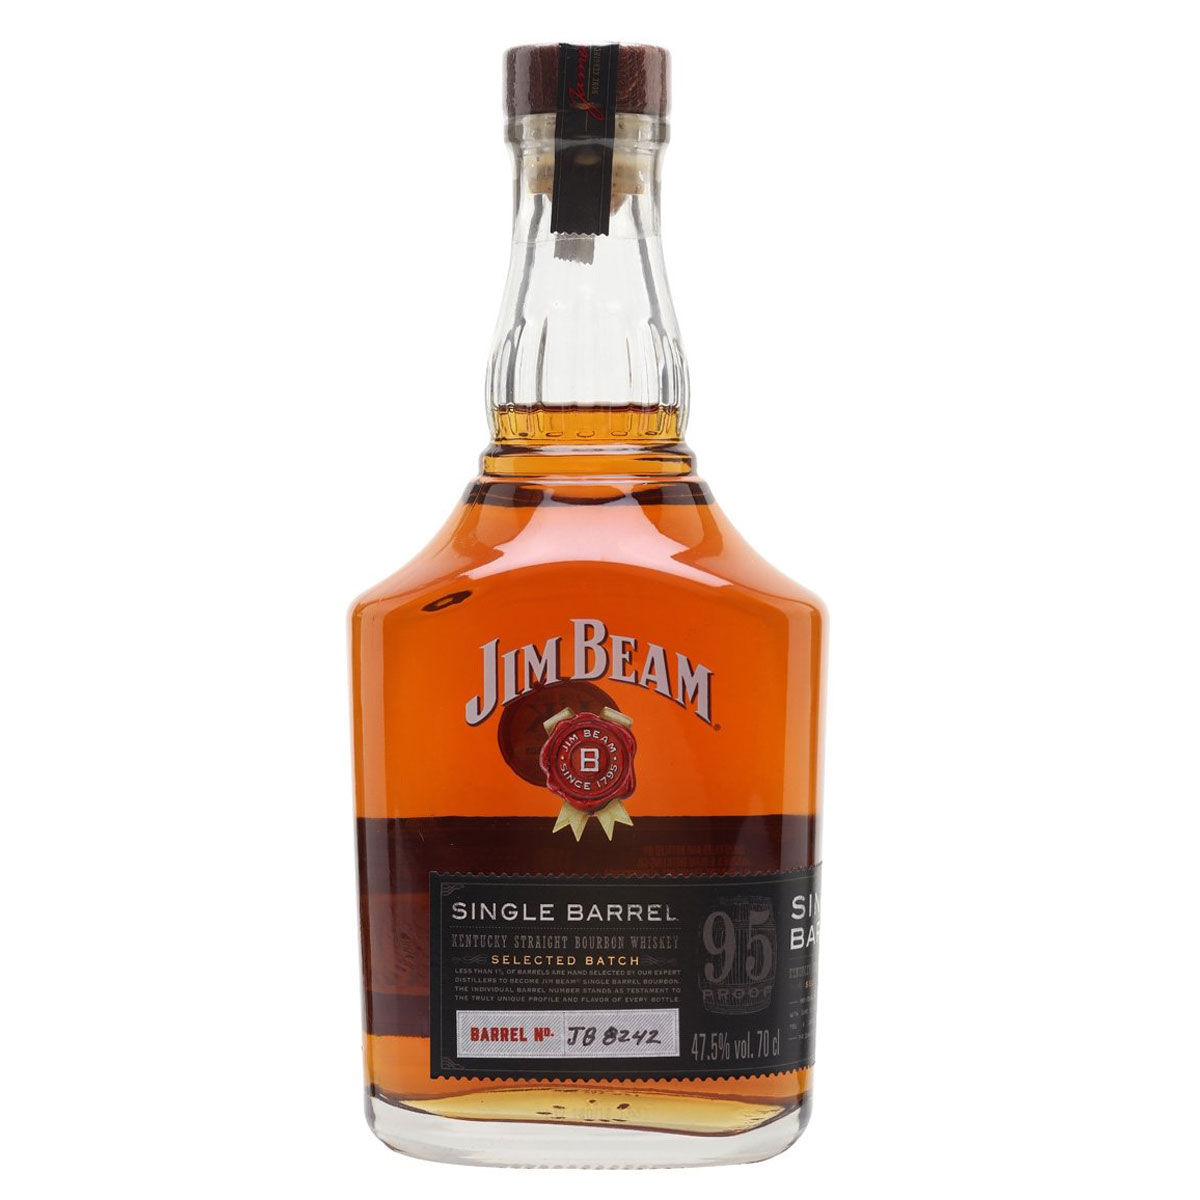 a bottle of jim beam single barrel whisky